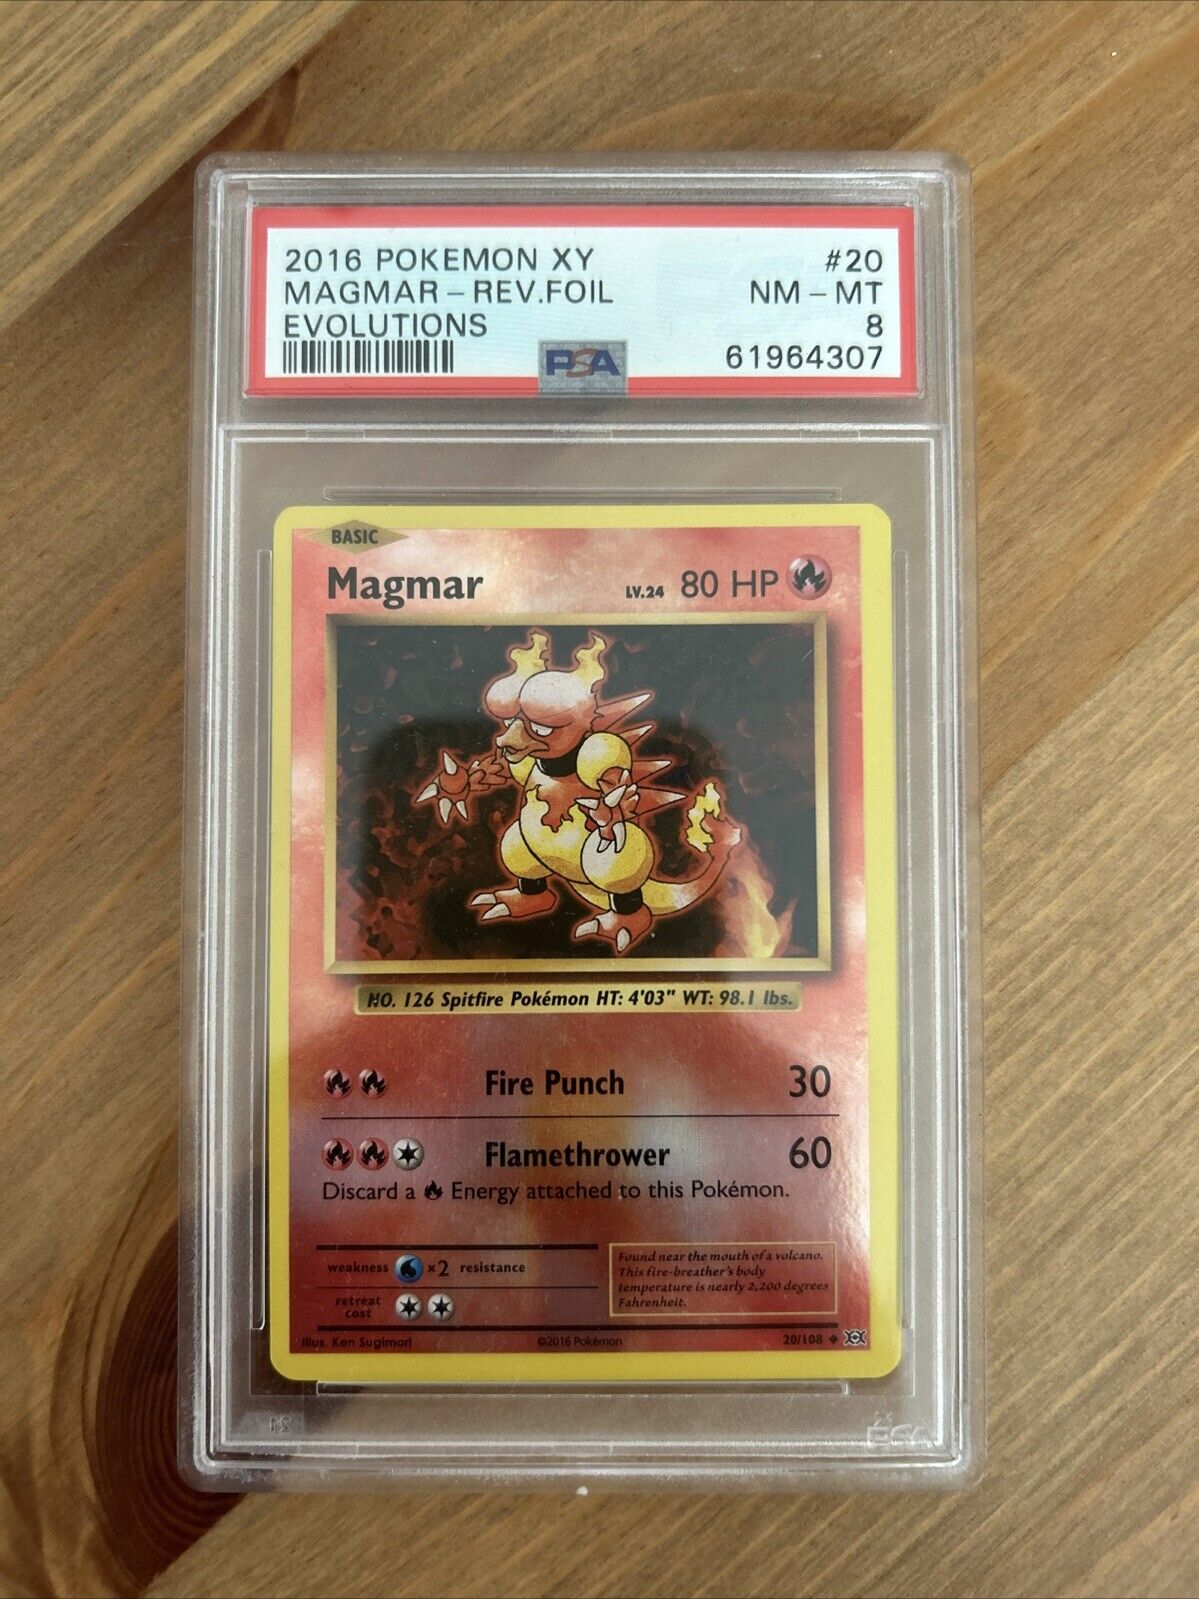 PSA 8 Pokemon Card Magmar 20/108 Evolutions Reverse Holo